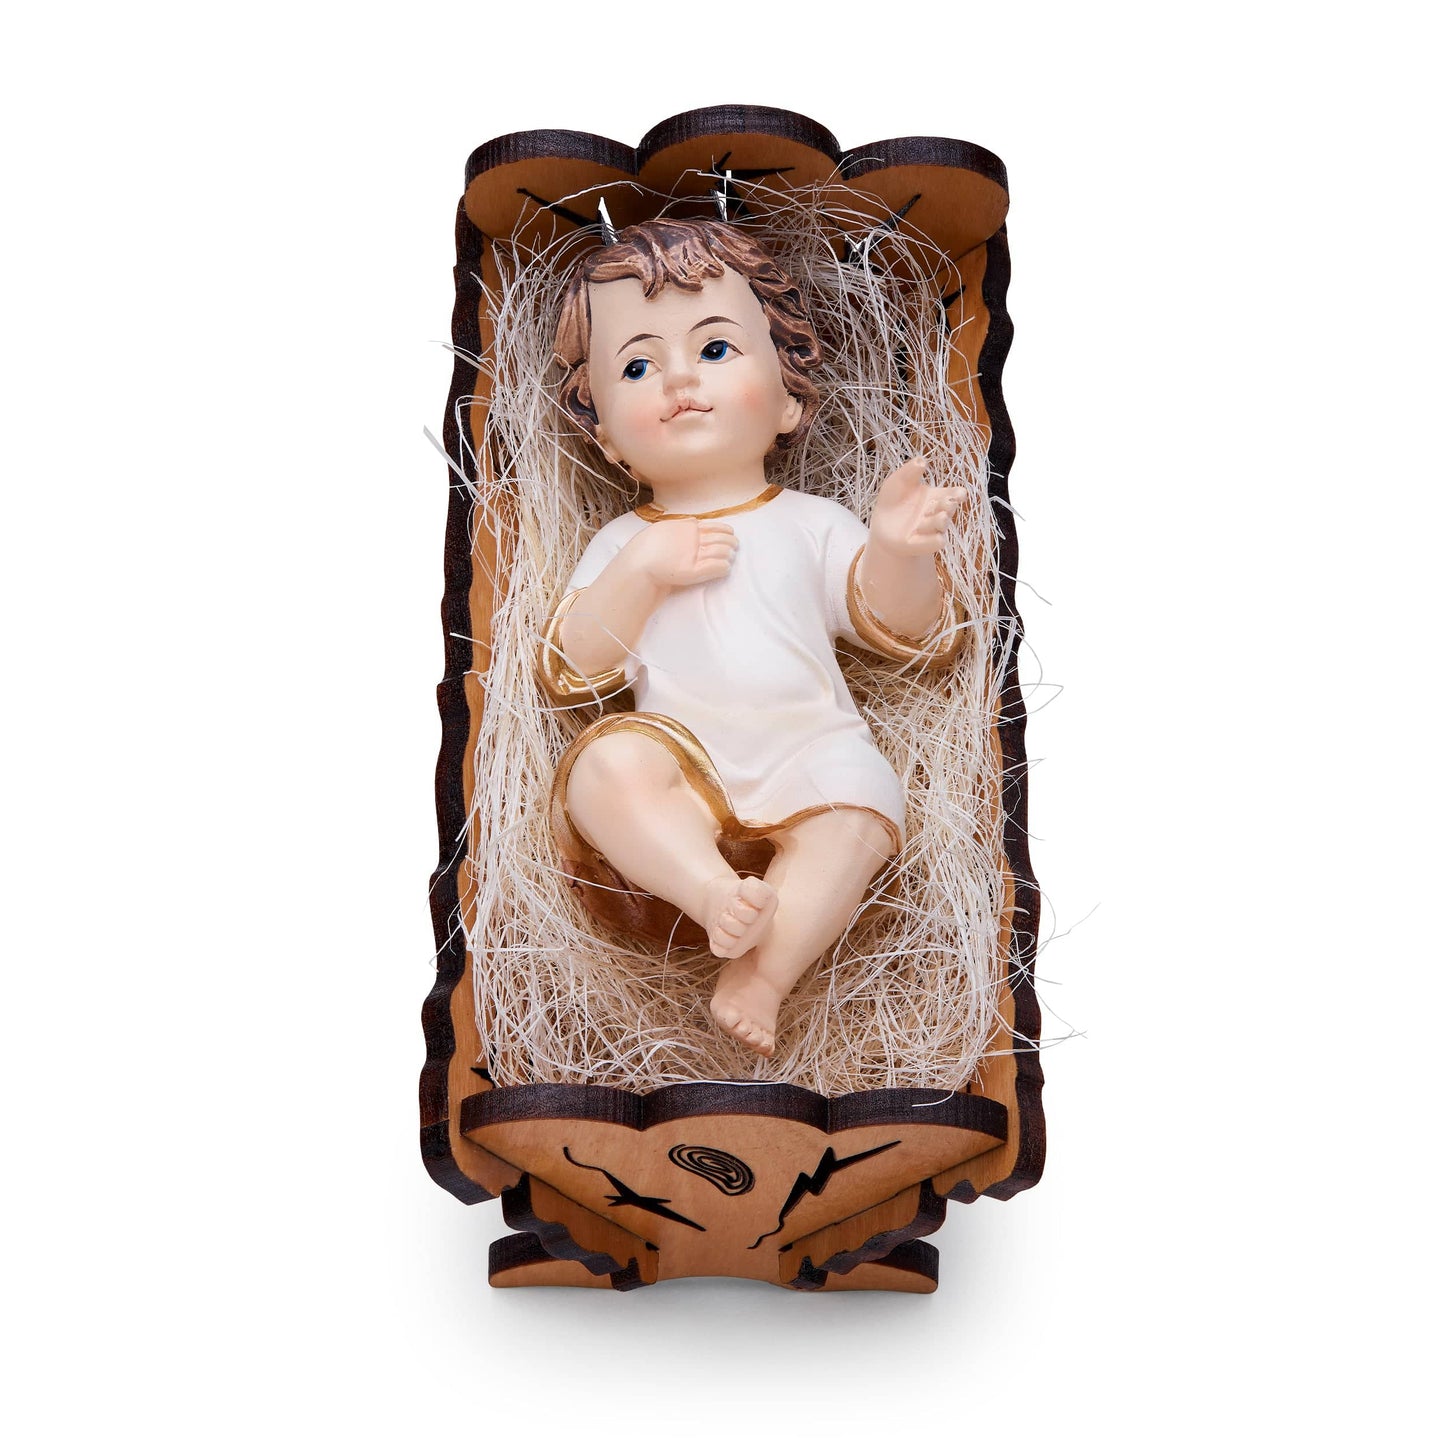 MONDO CATTOLICO Cm 10 (3.9 inches) Resin Baby Jesus in the Crib